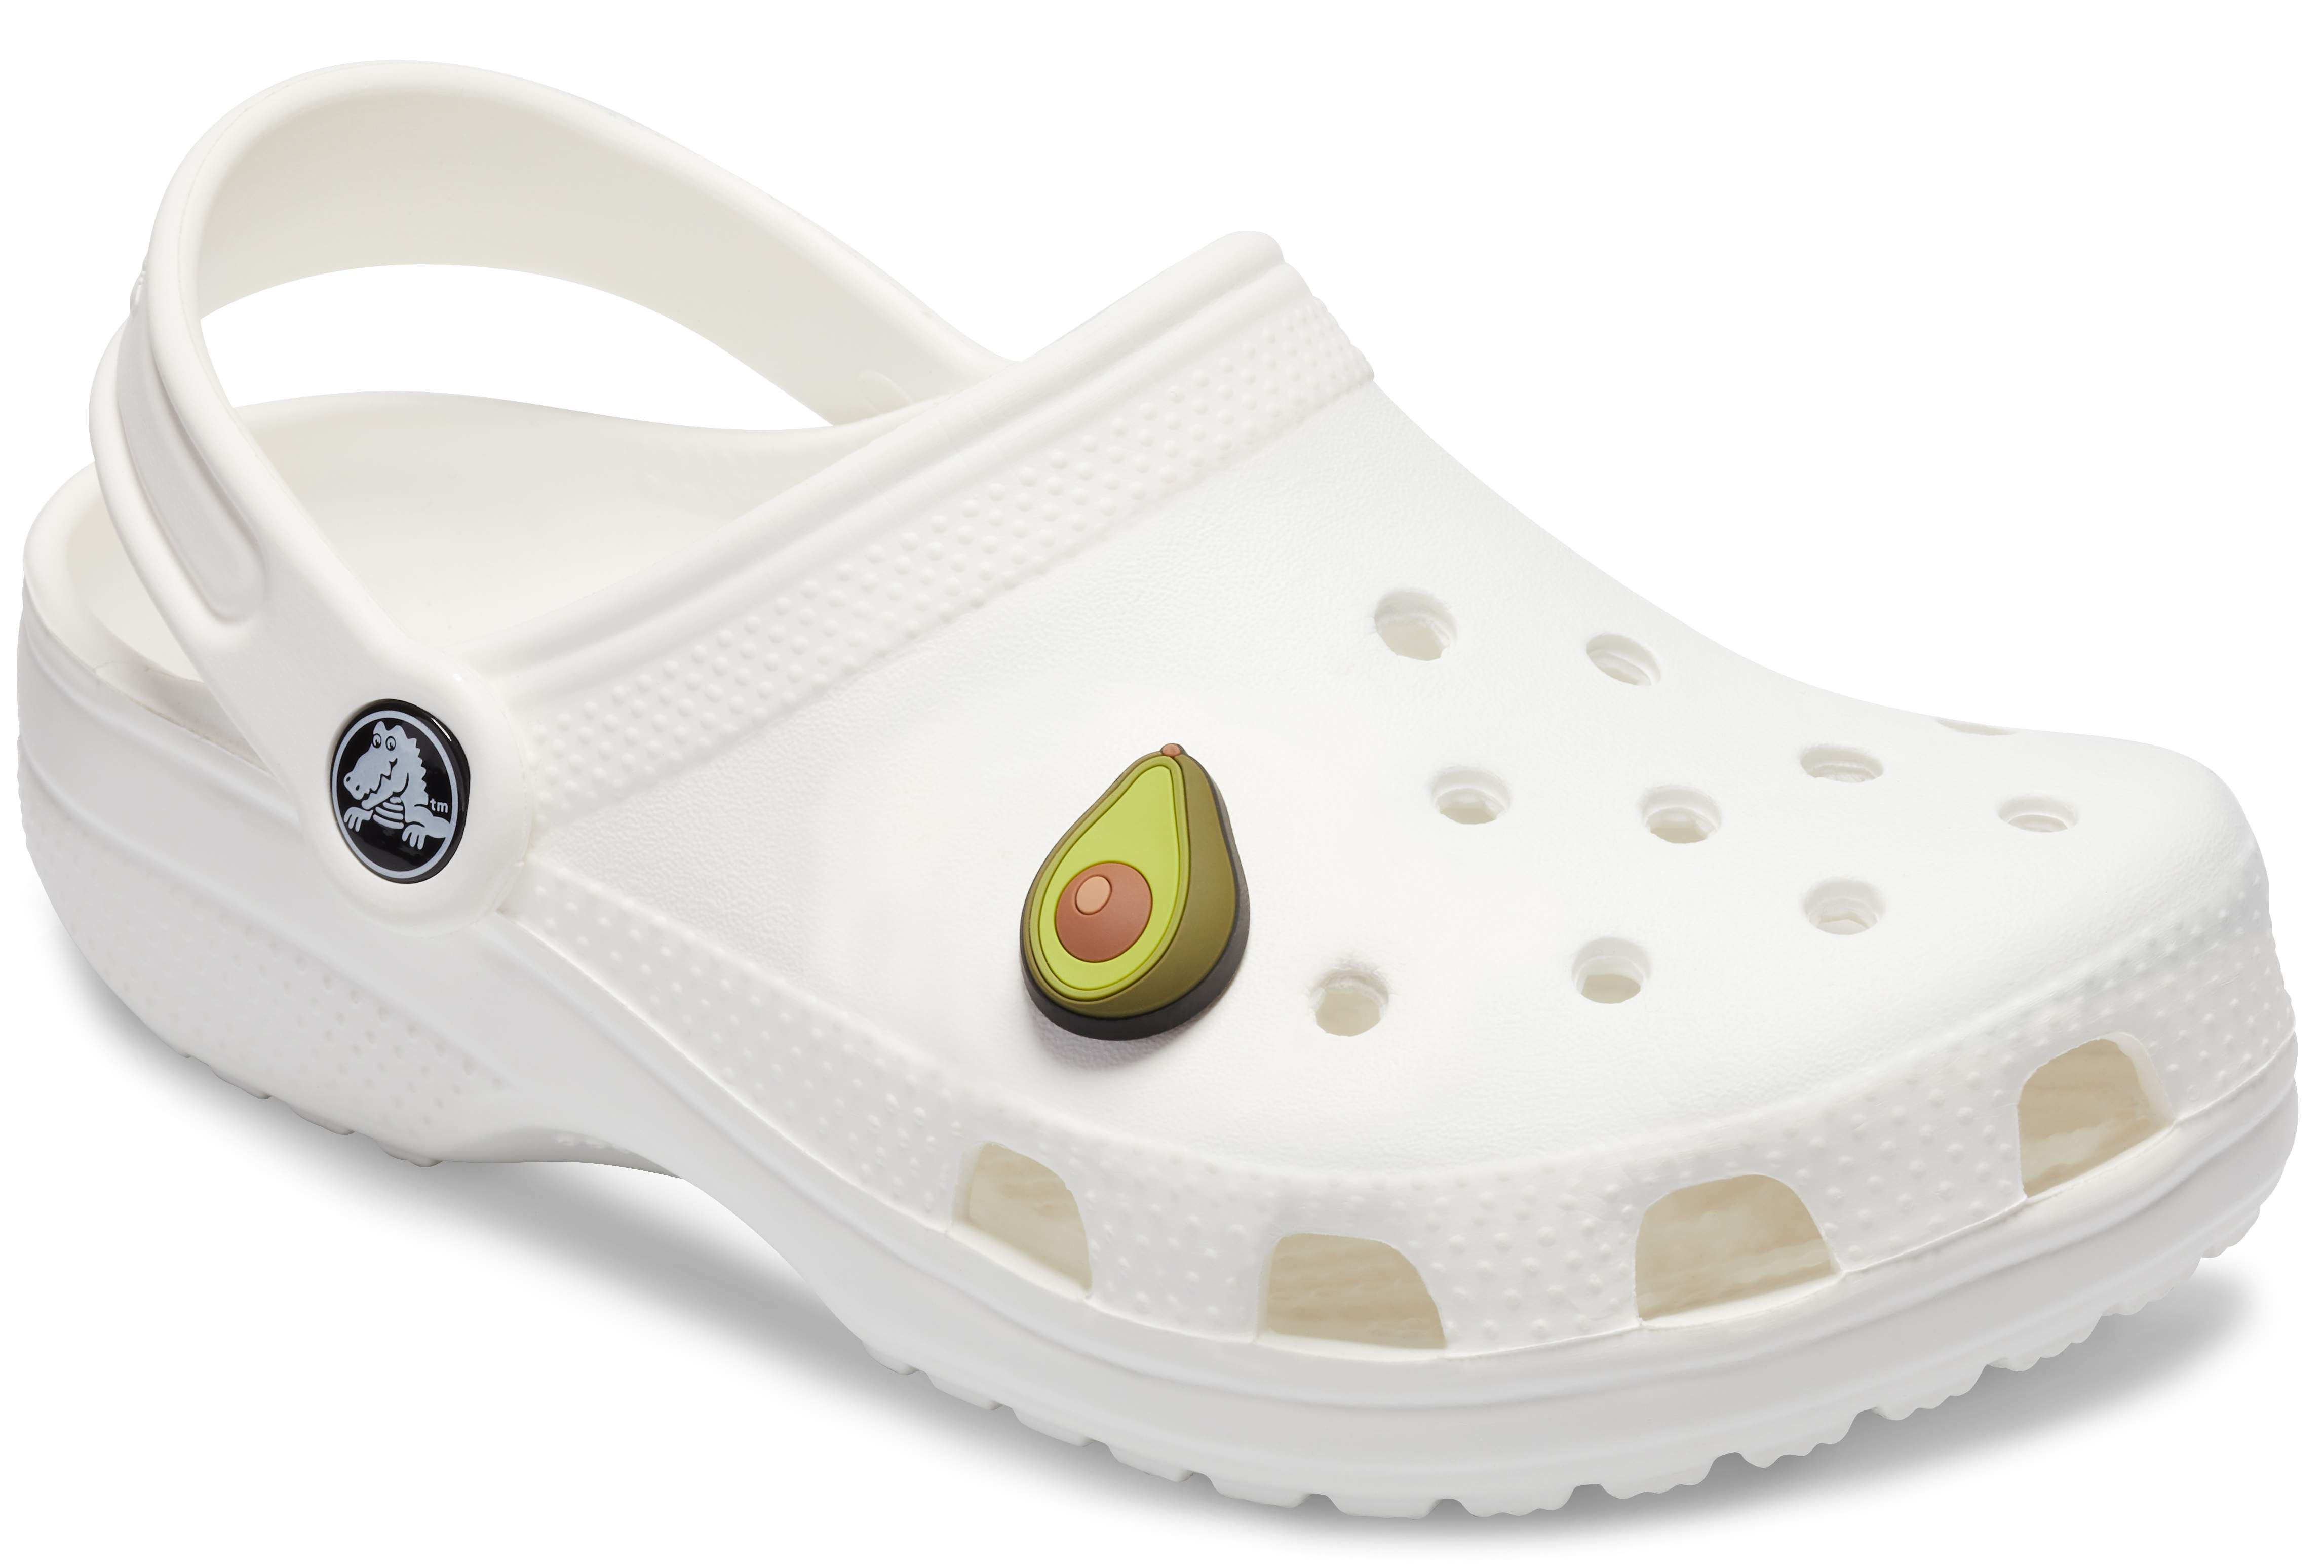 Clogs Eis 7 Schuh Pins Popcorn Anstecker für Crocs Shoe Charms u.a. 